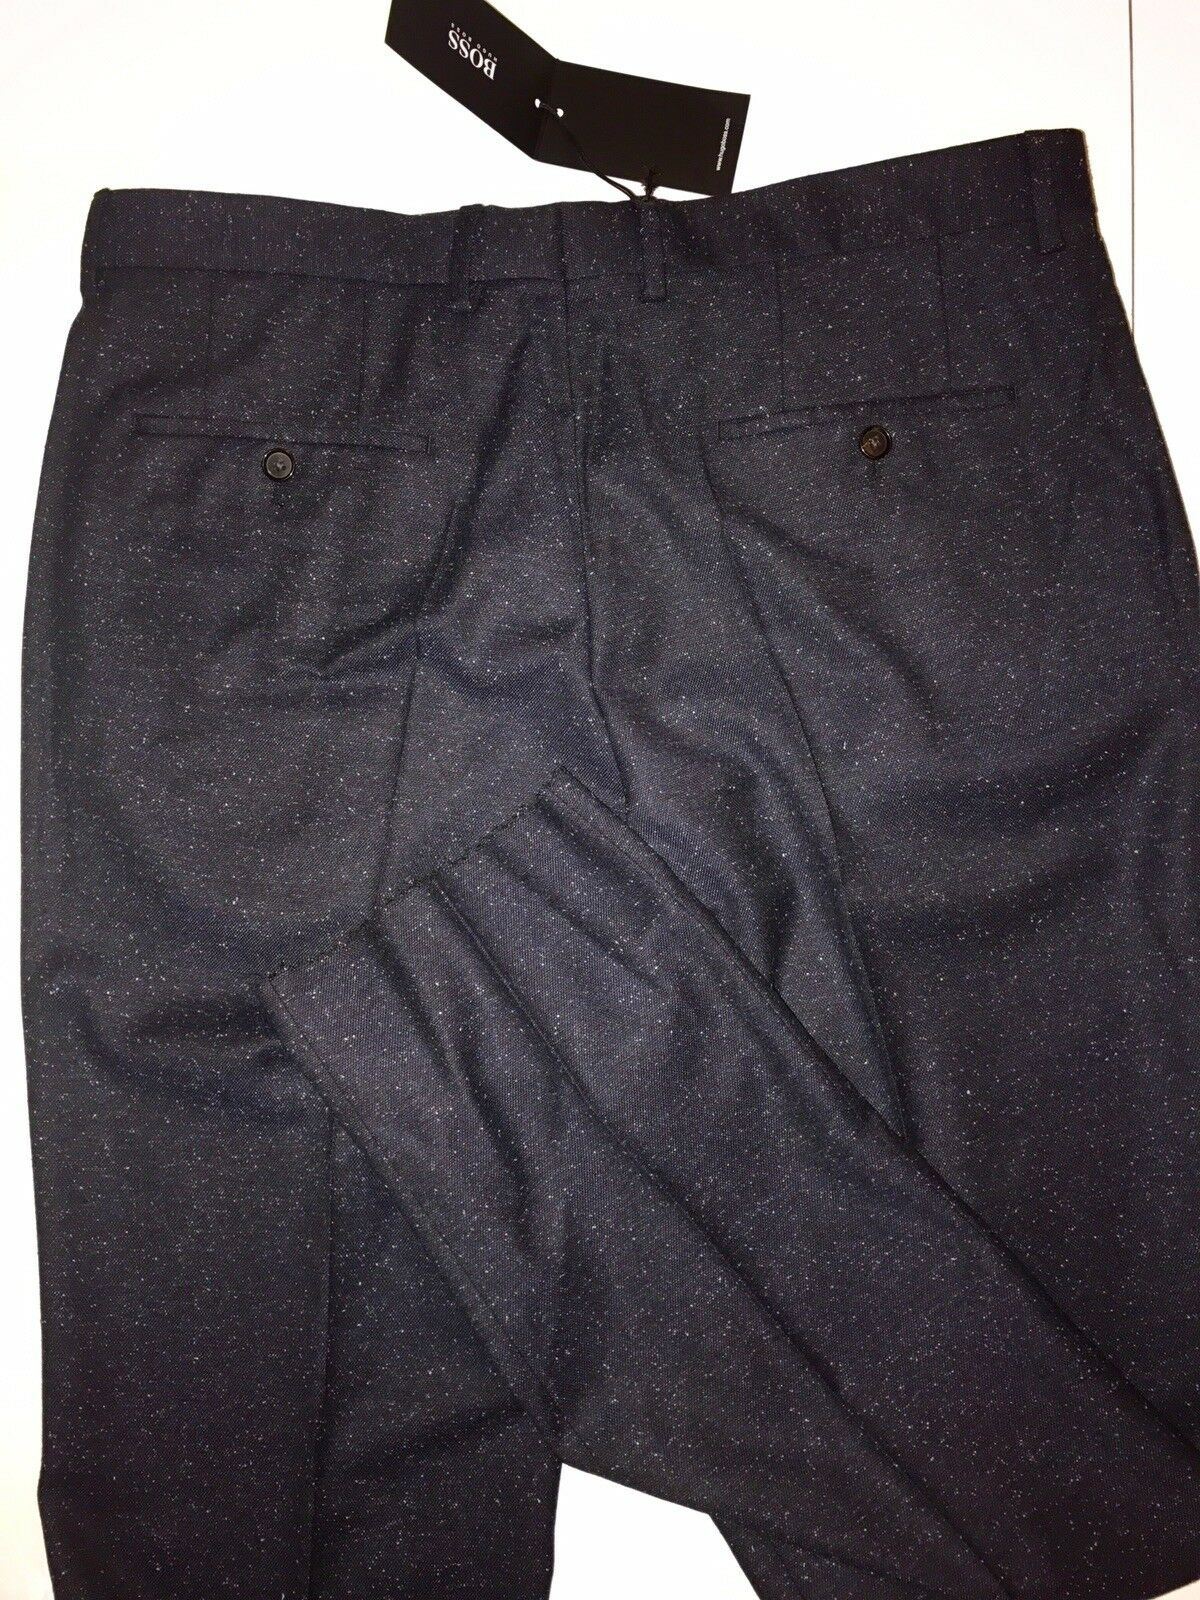 NWT $225 Boss Hugo Boss Melancey_1 Mens Blue Modern Dress Pants Size 32R US